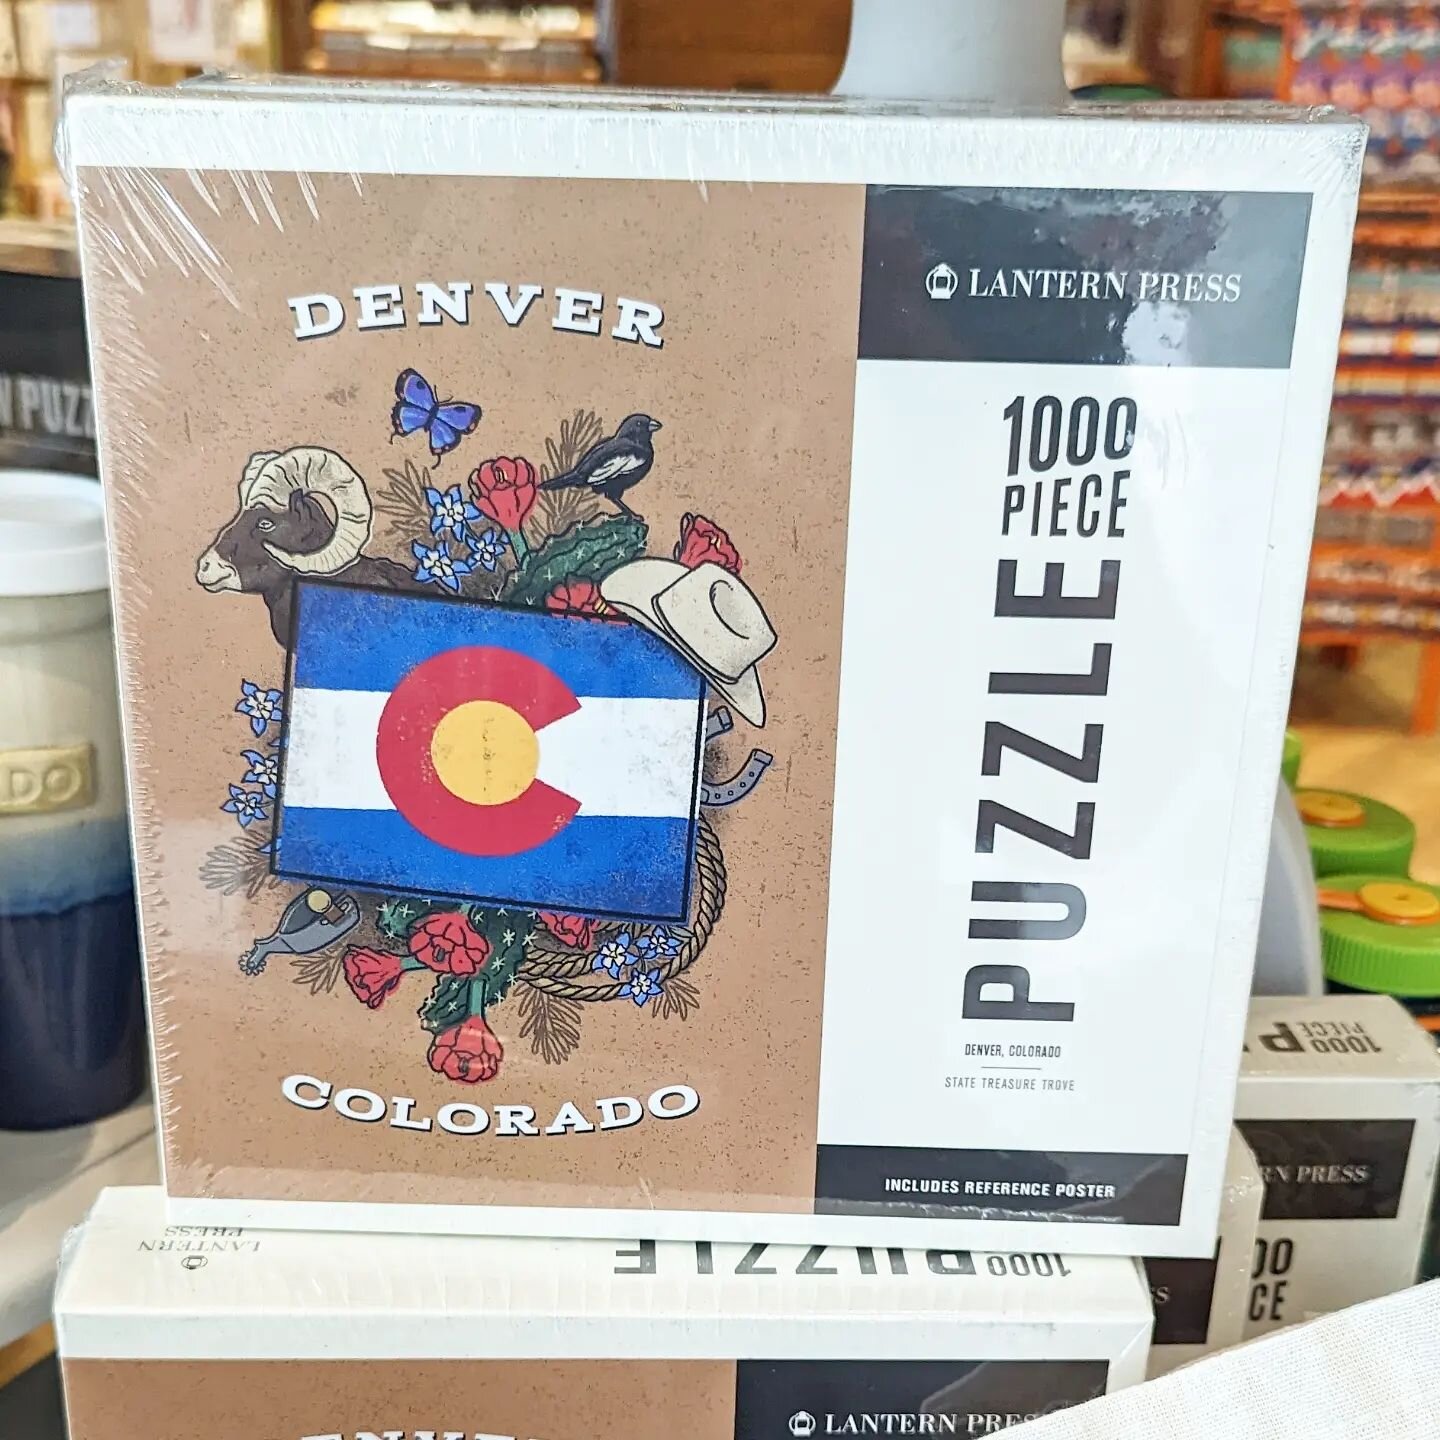 Find a great Colorado or Denver themed puzzle at I Heart Denver Store. 

#iheartdenverstore #puzzles #colorado #denver #giftideas #familyfun #vacationactivities #shopdenver #denverstore #funstuff